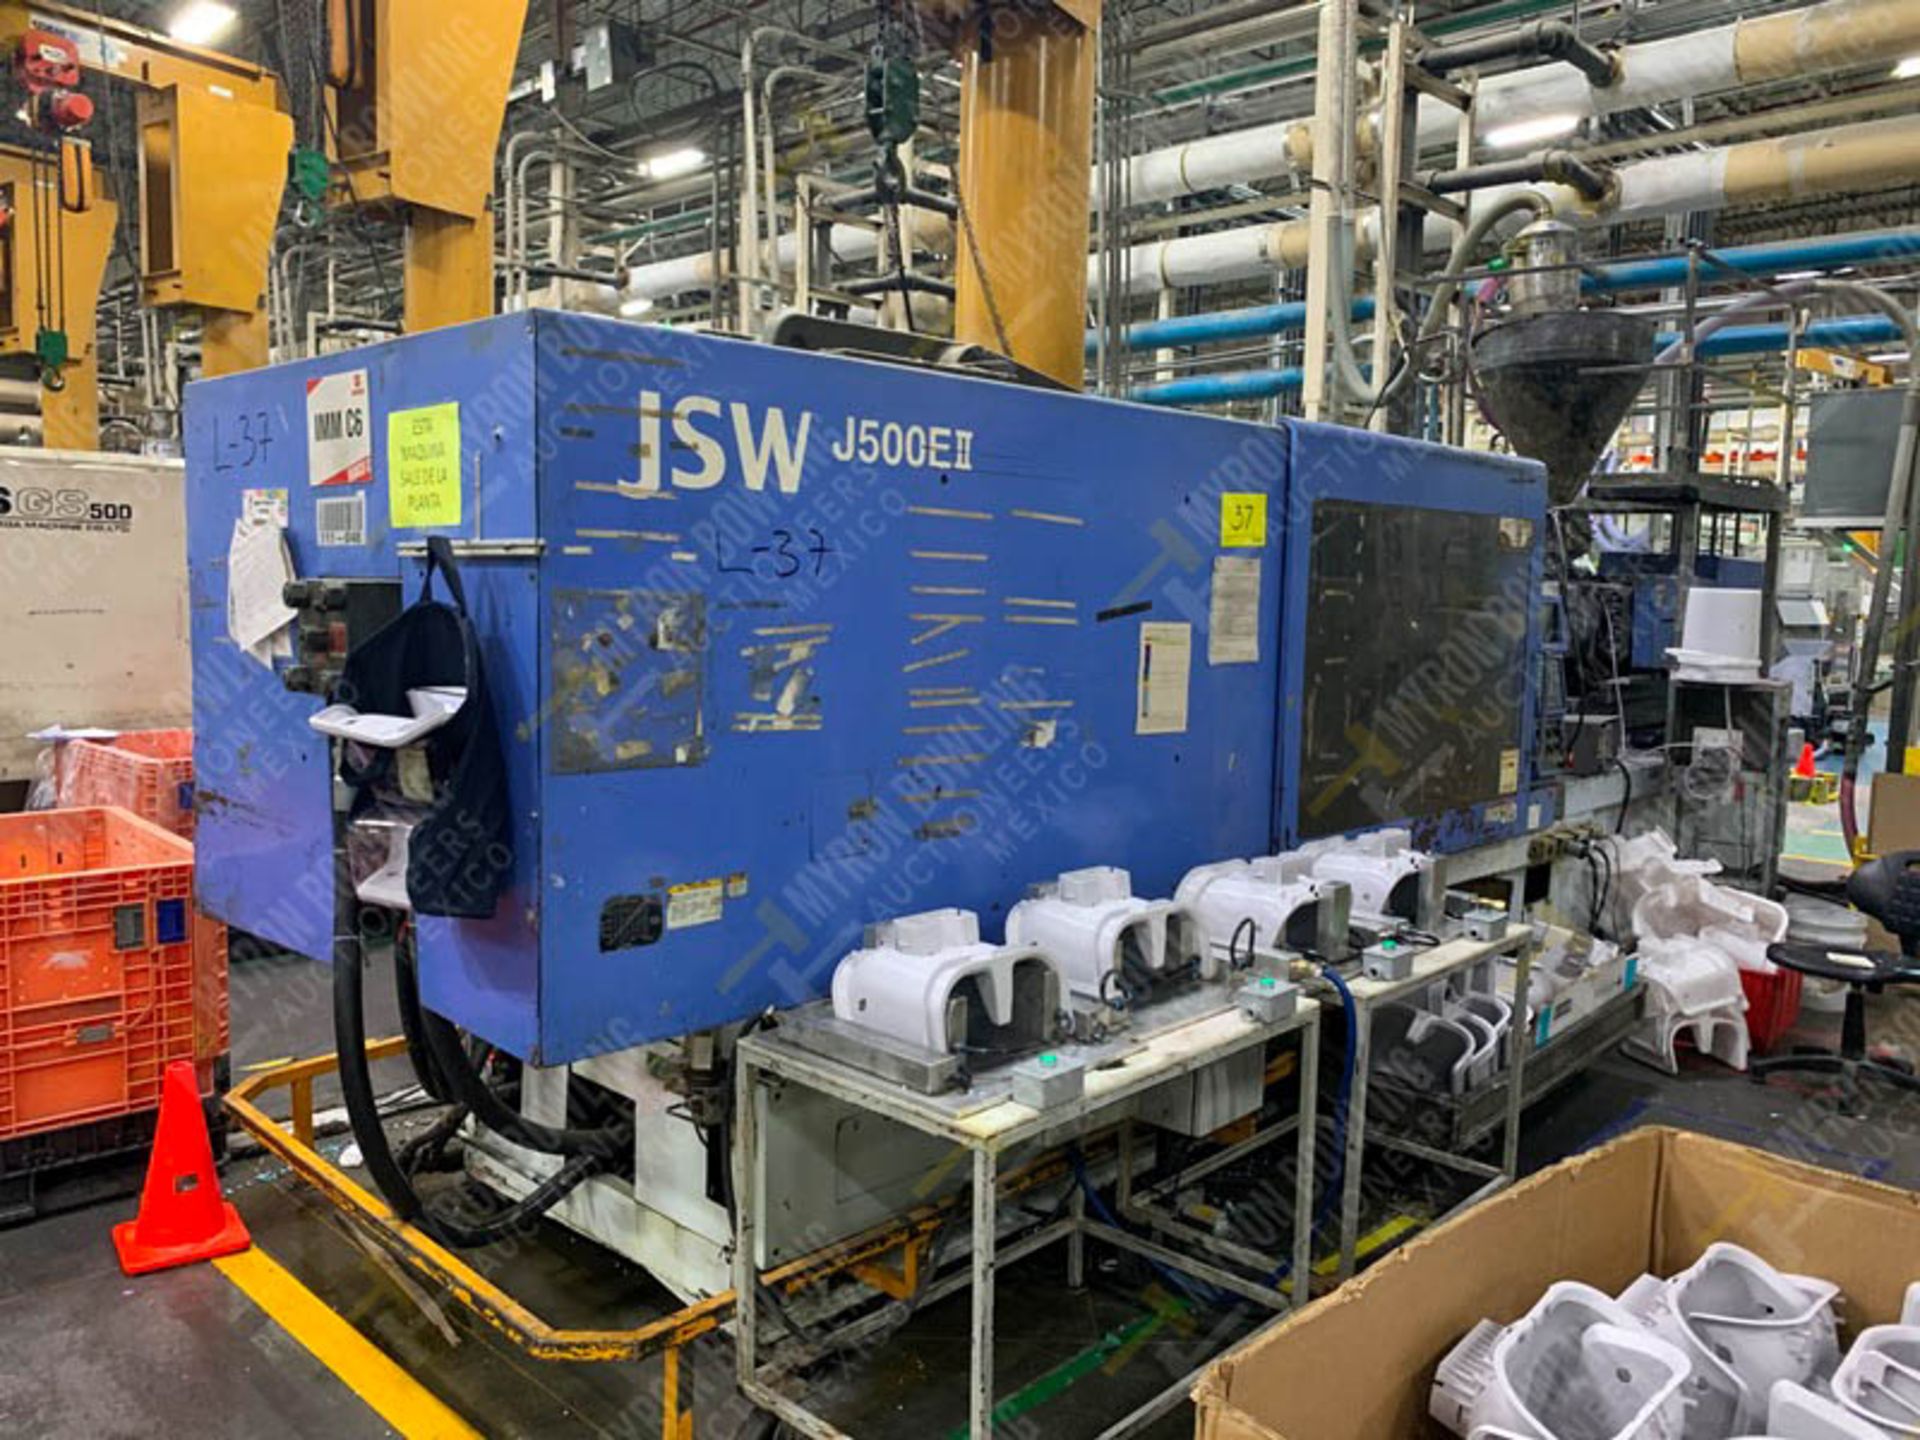 500 TON JSW J500ELL PLASTIC INJECTION MOLDING MACHINE, MFG YEAR 1997